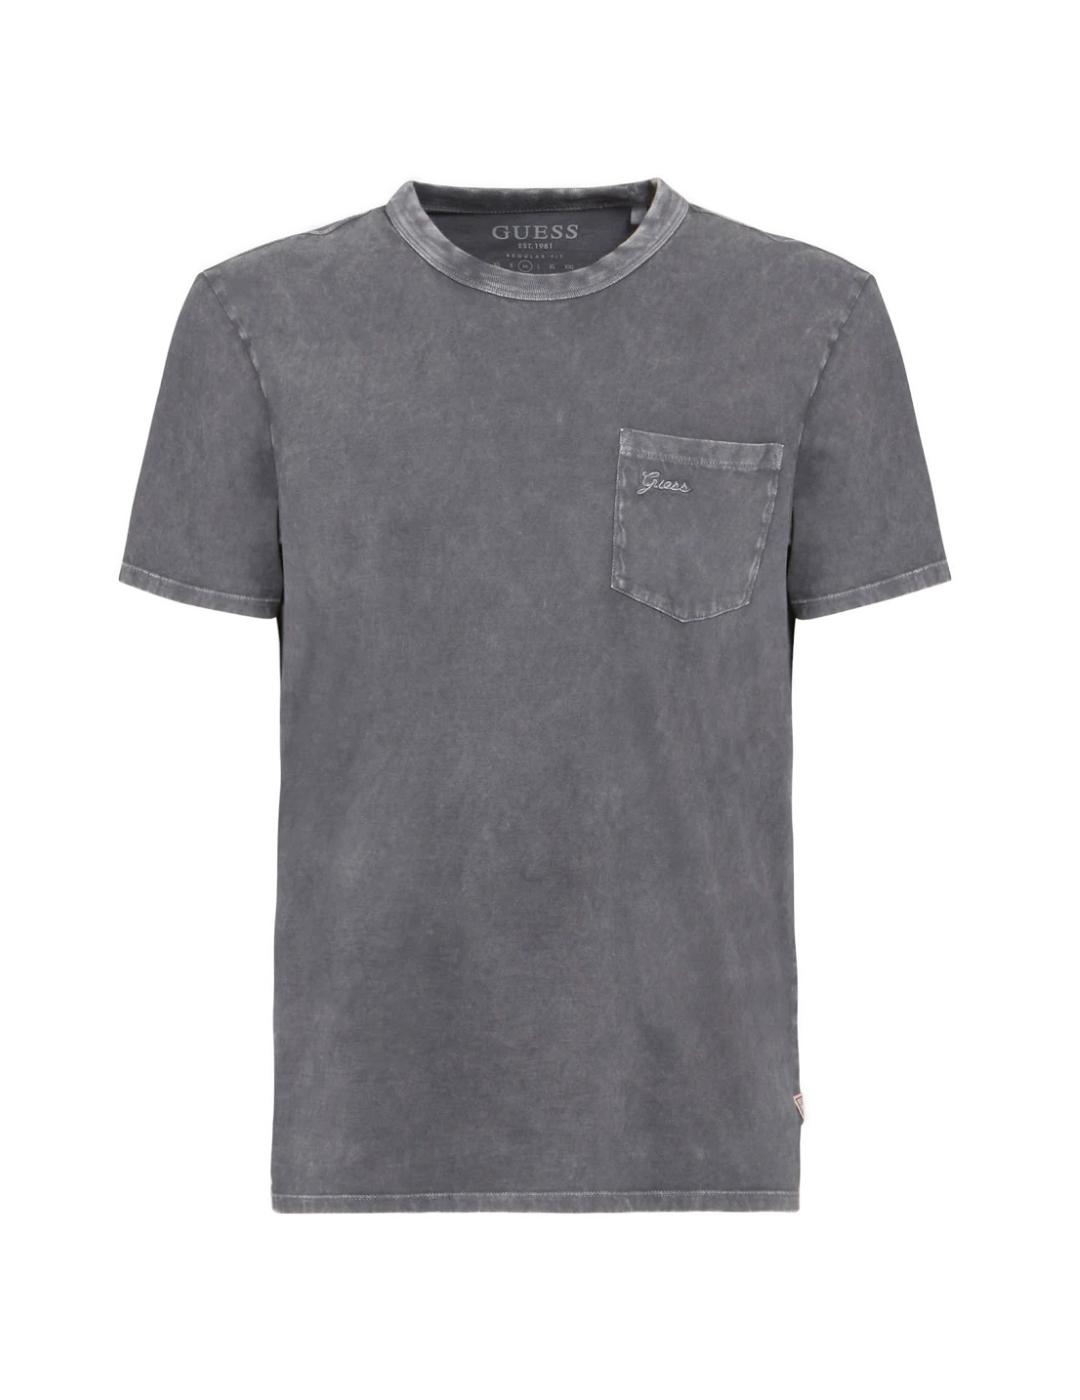 Camiseta Guess SS sueded gris para hombre-a